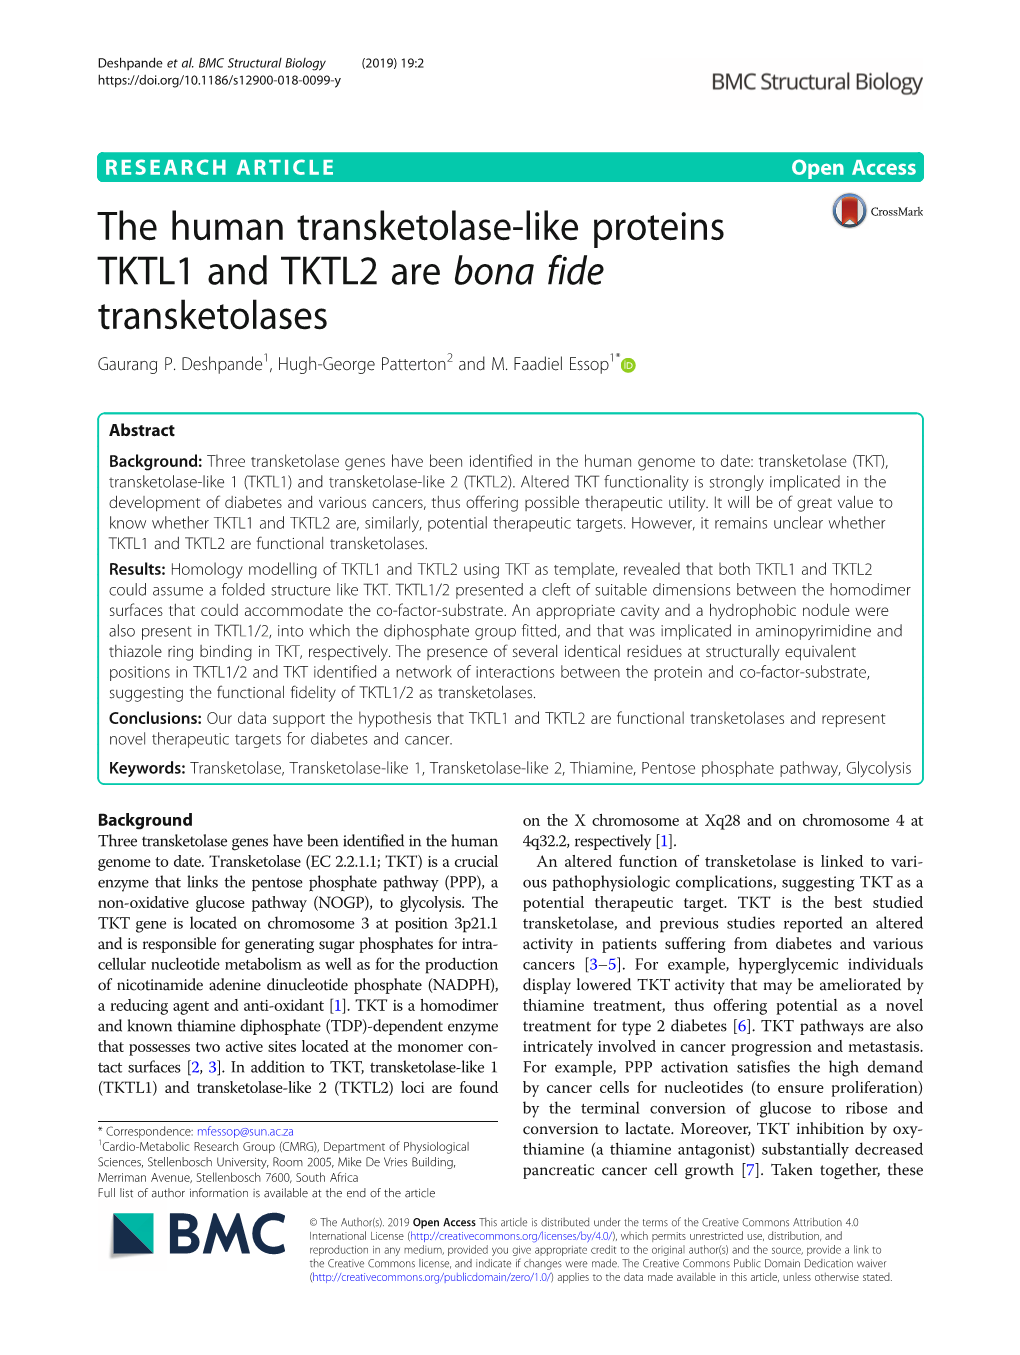 The Human Transketolase-Like Proteins TKTL1 and TKTL2 Are Bona Fide Transketolases Gaurang P